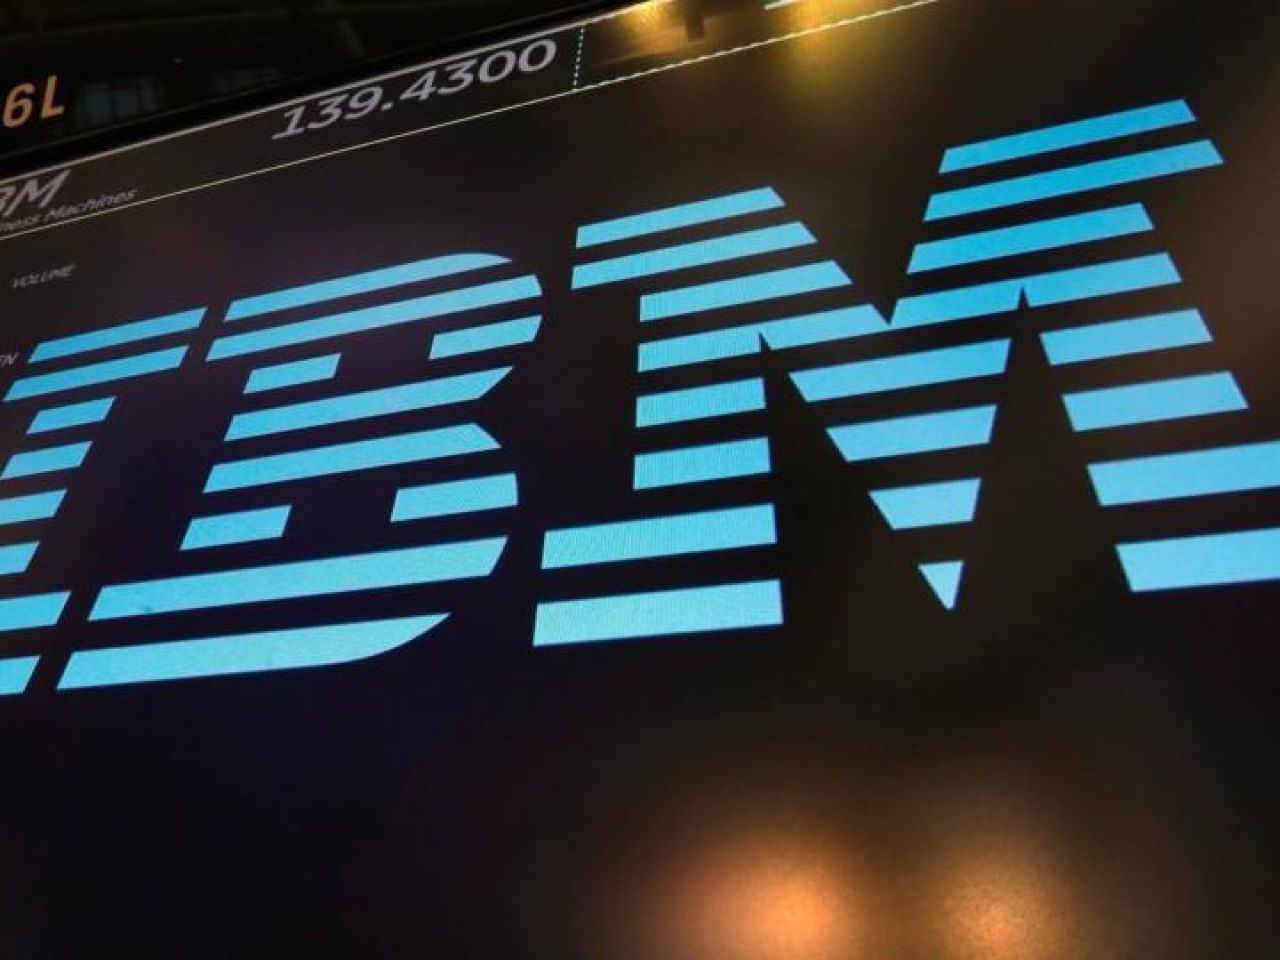 「IBM Cloud」で障害、世界規模で影響--復旧中